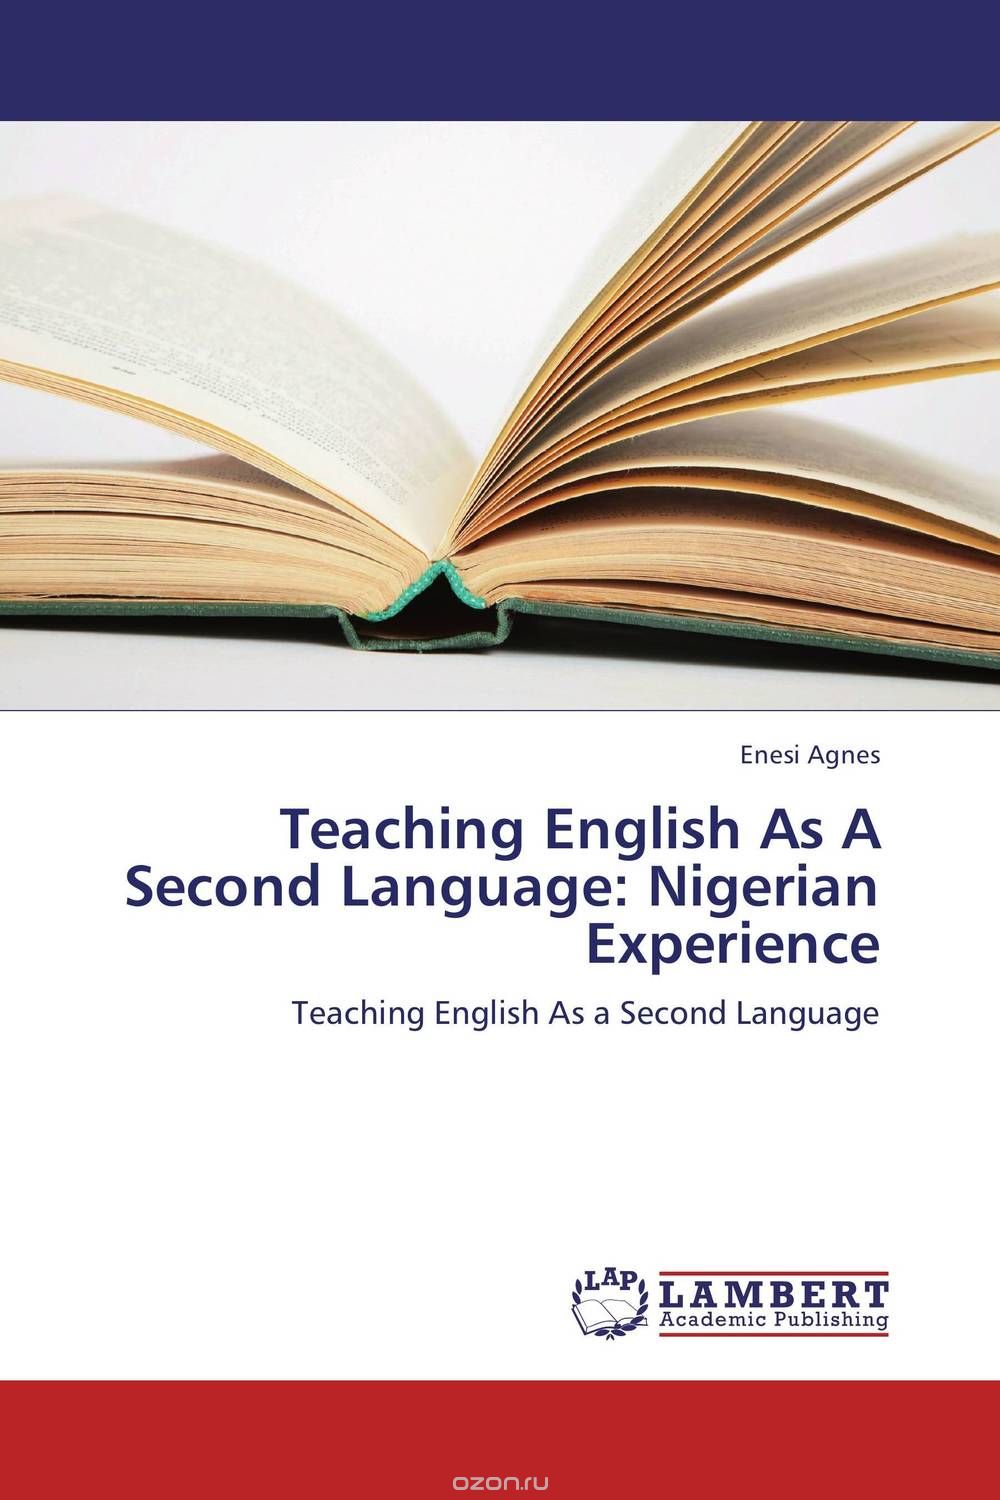 Скачать книгу "Teaching English As A Second Language: Nigerian Experience"